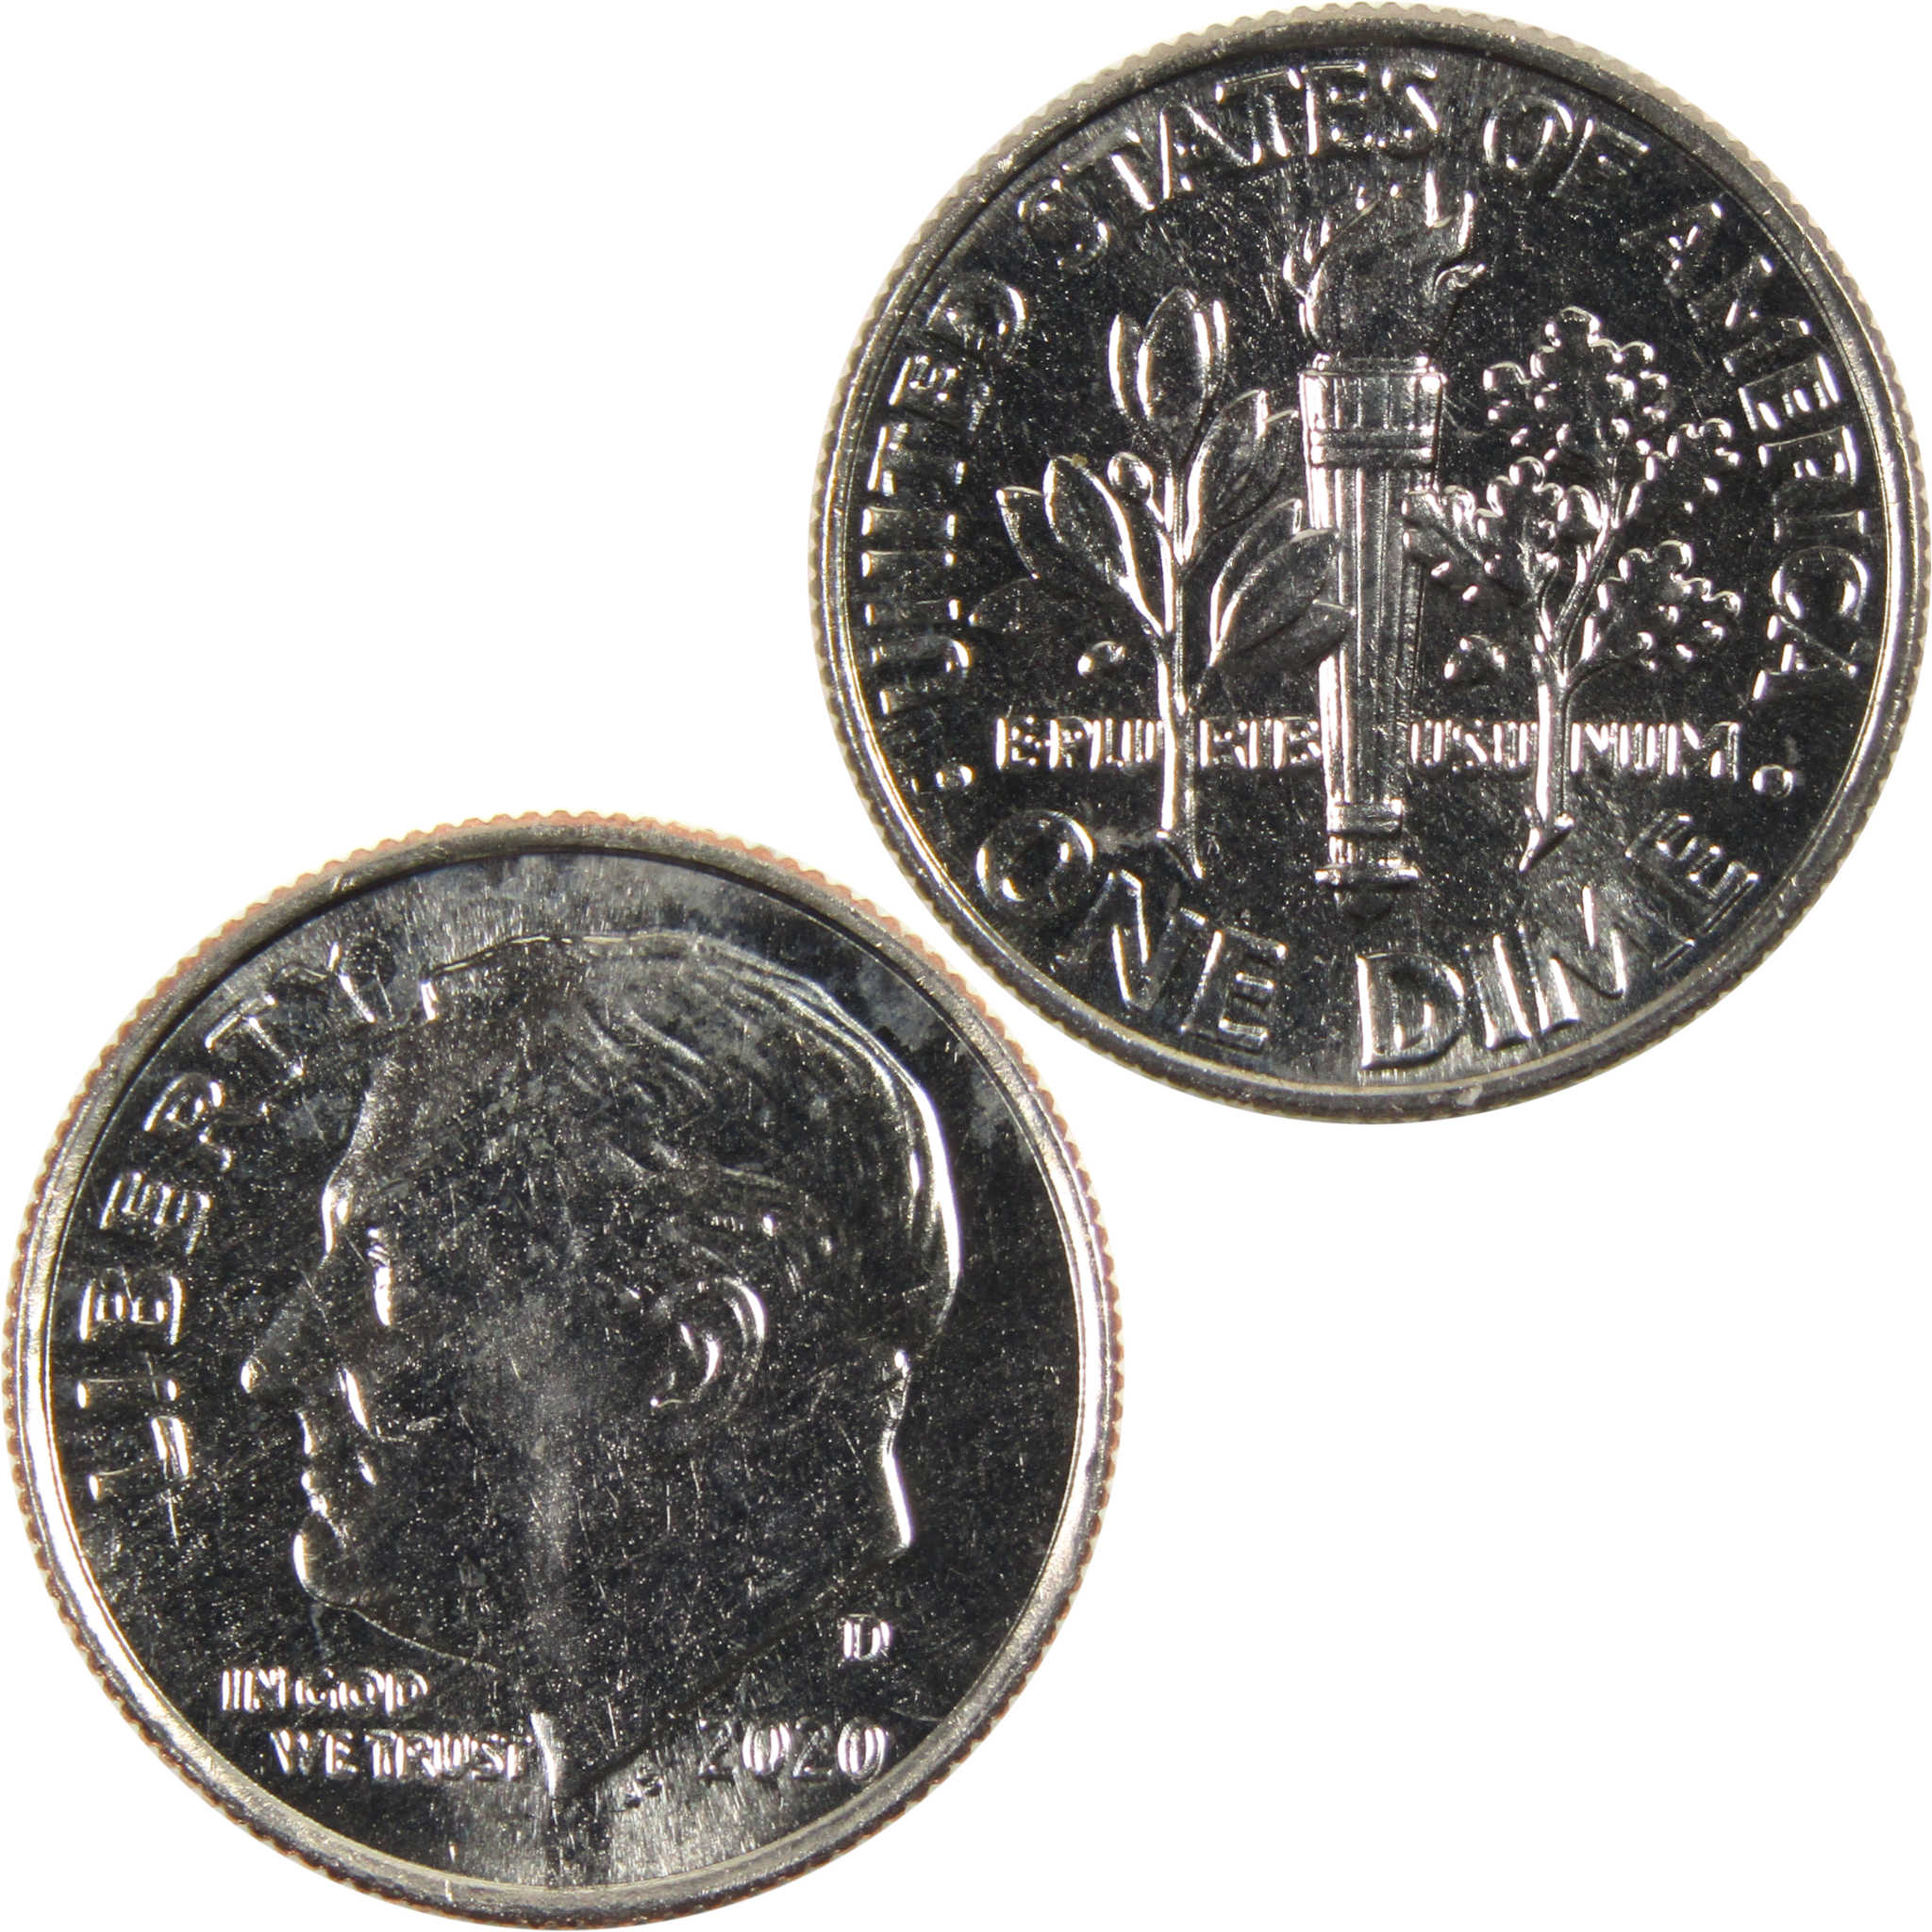 2020 D Roosevelt Dime BU Uncirculated Clad 10c Coin